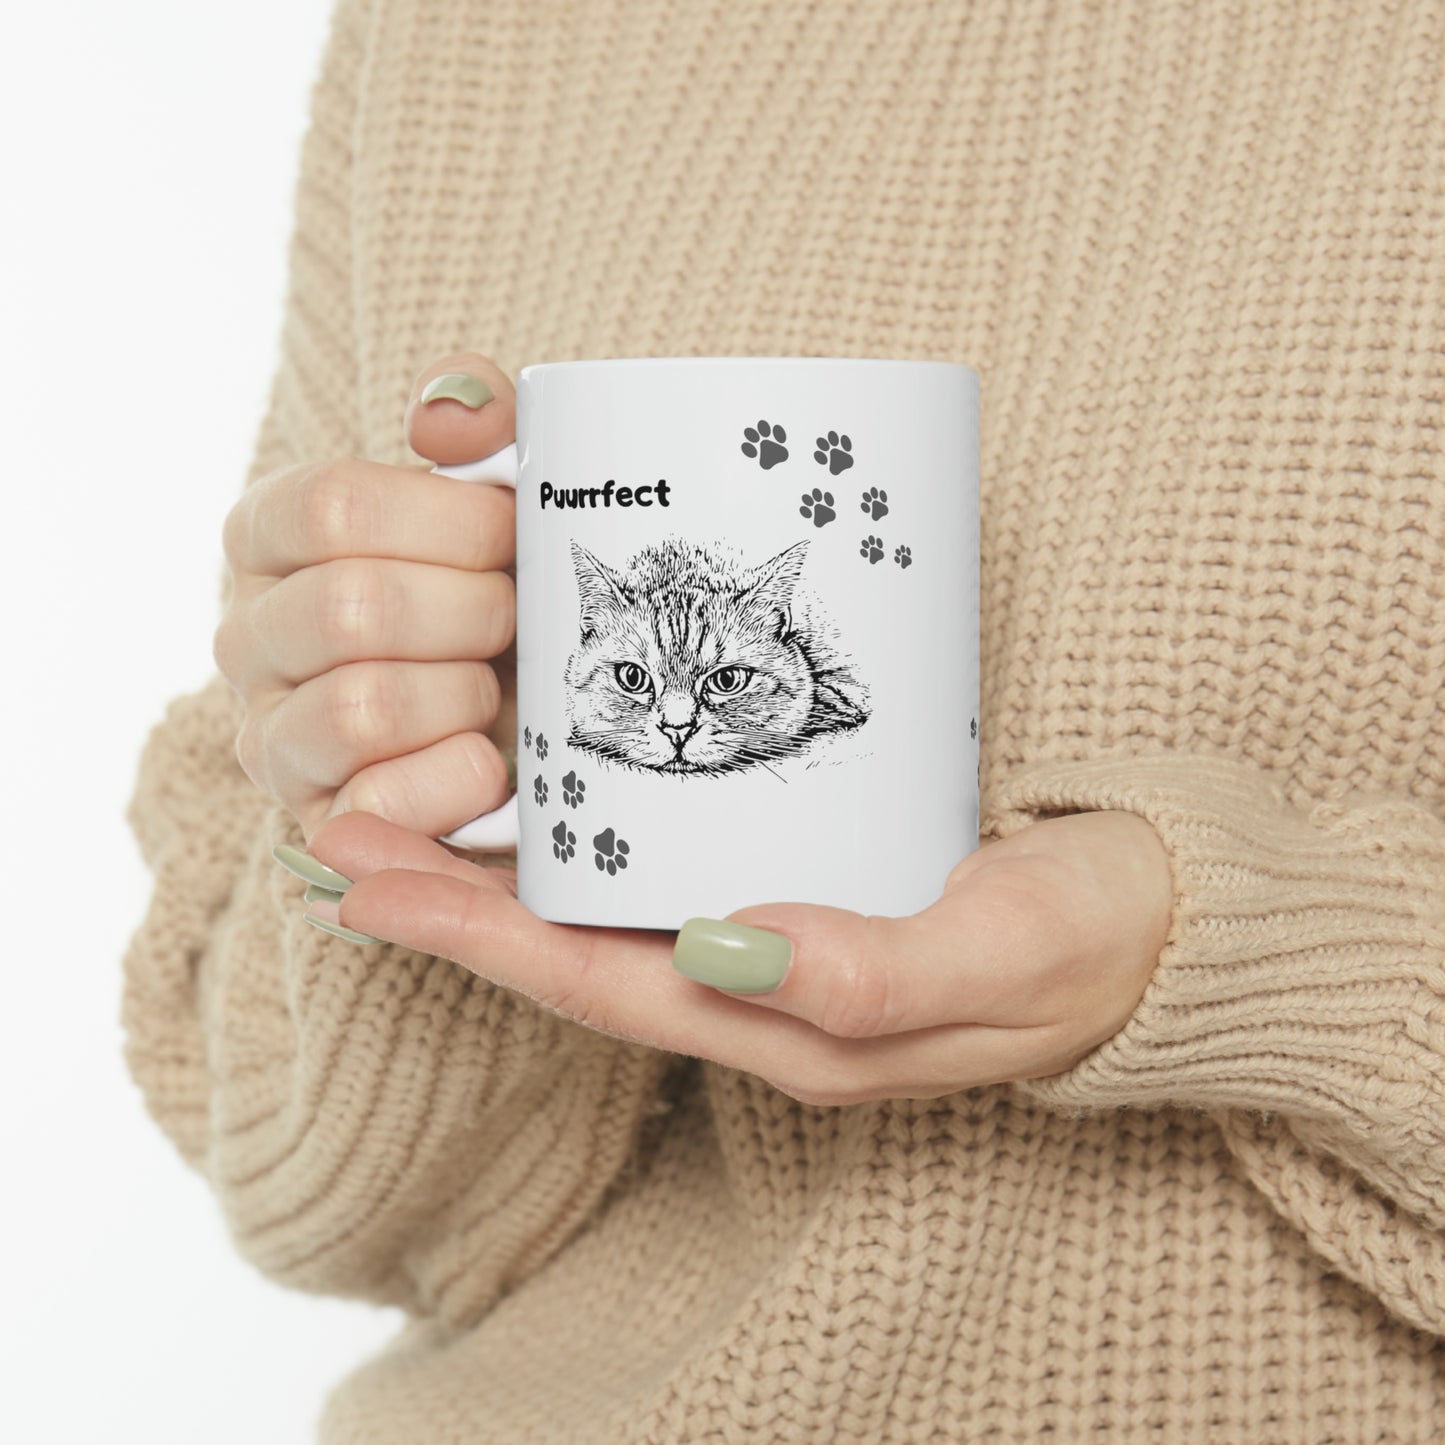 Cat Lady Coffee Mug - "Puurrfect" Motif - Ceramic - 11oz